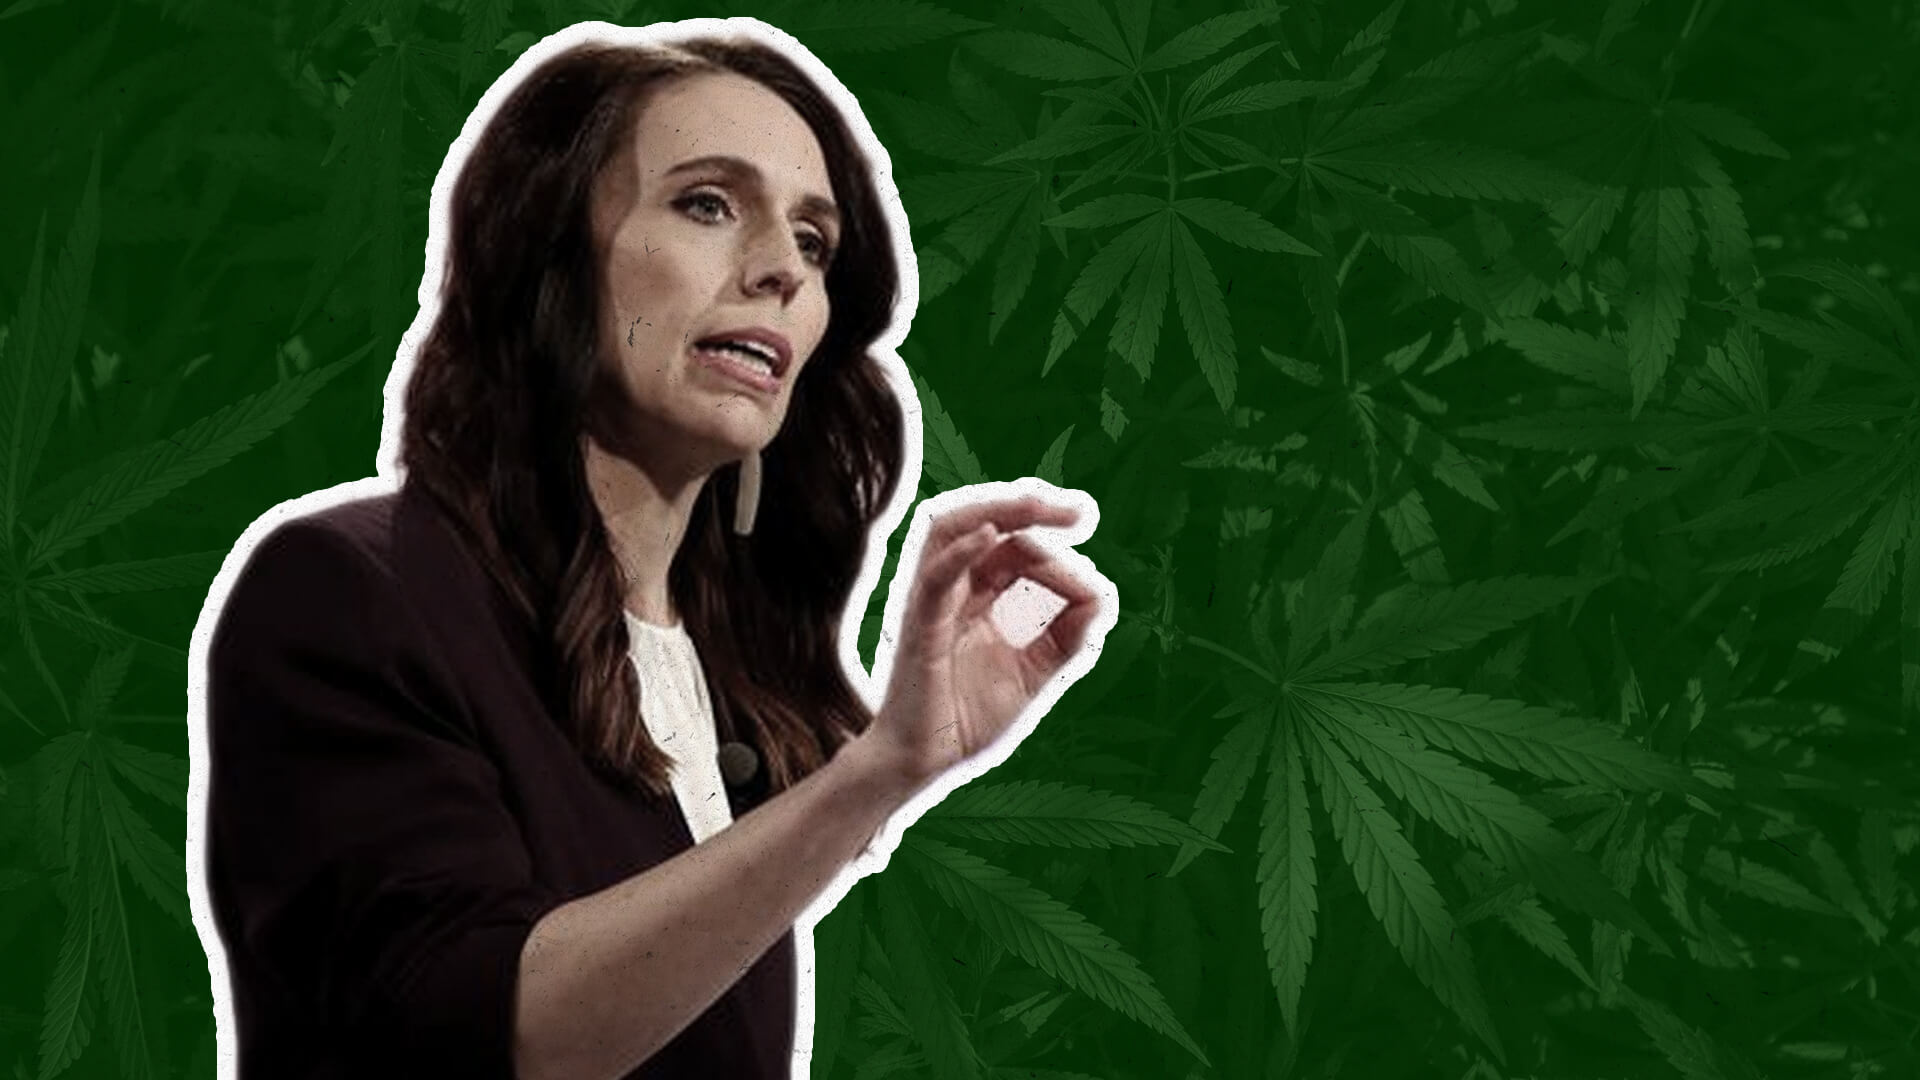 Jacinda Adern on a green background with marijuana leafs